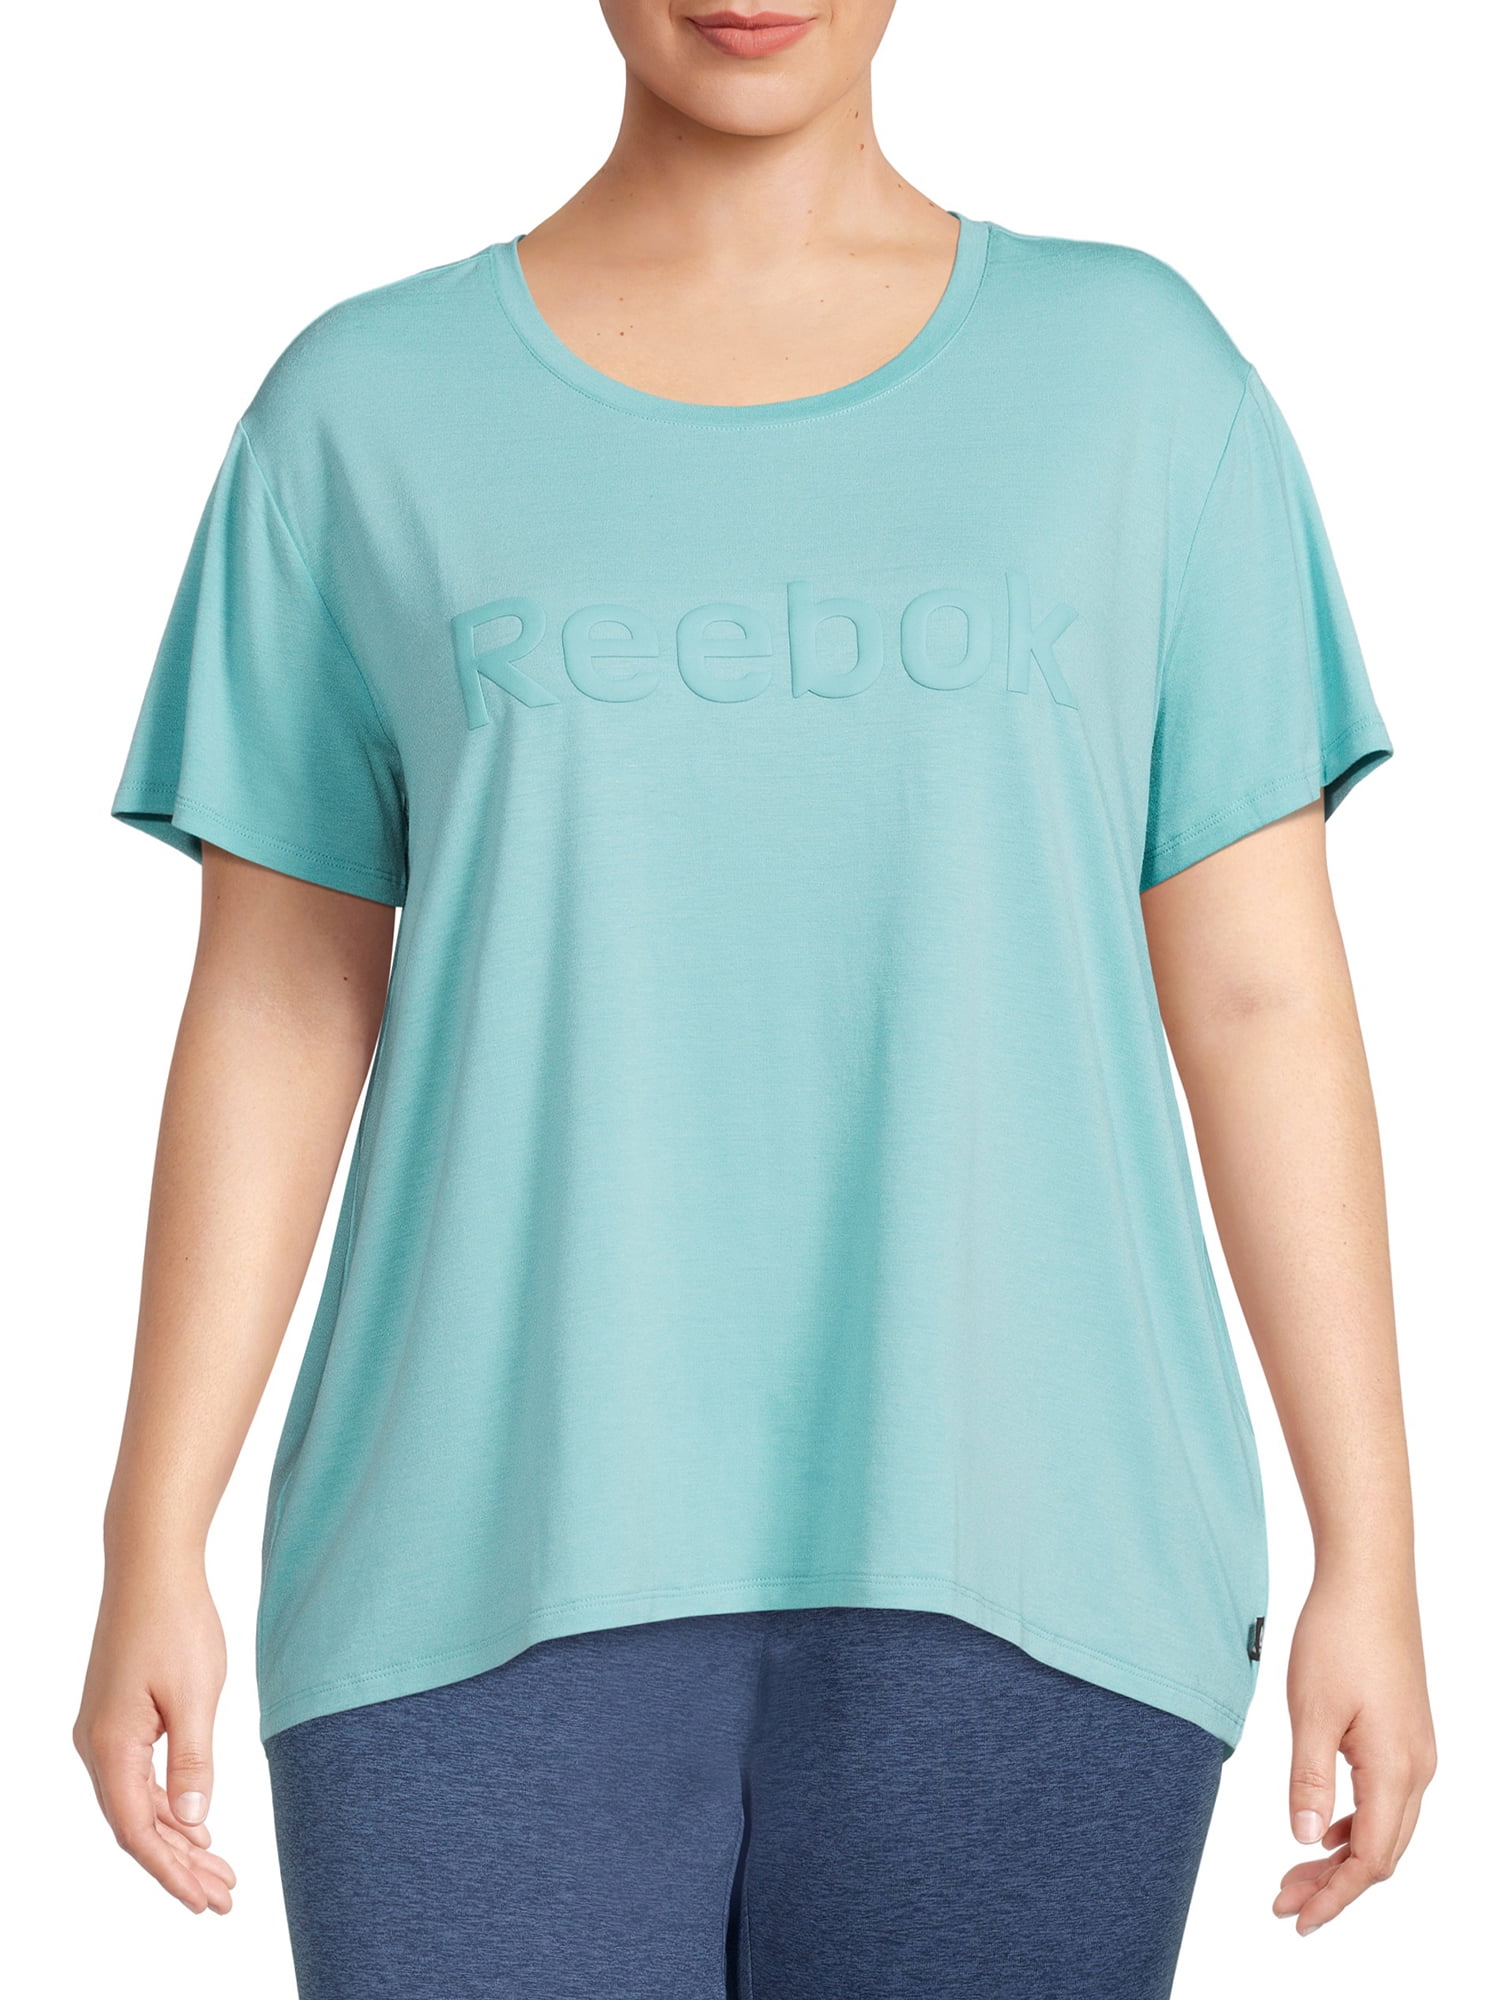 Are Reebok Shirts Any Good?